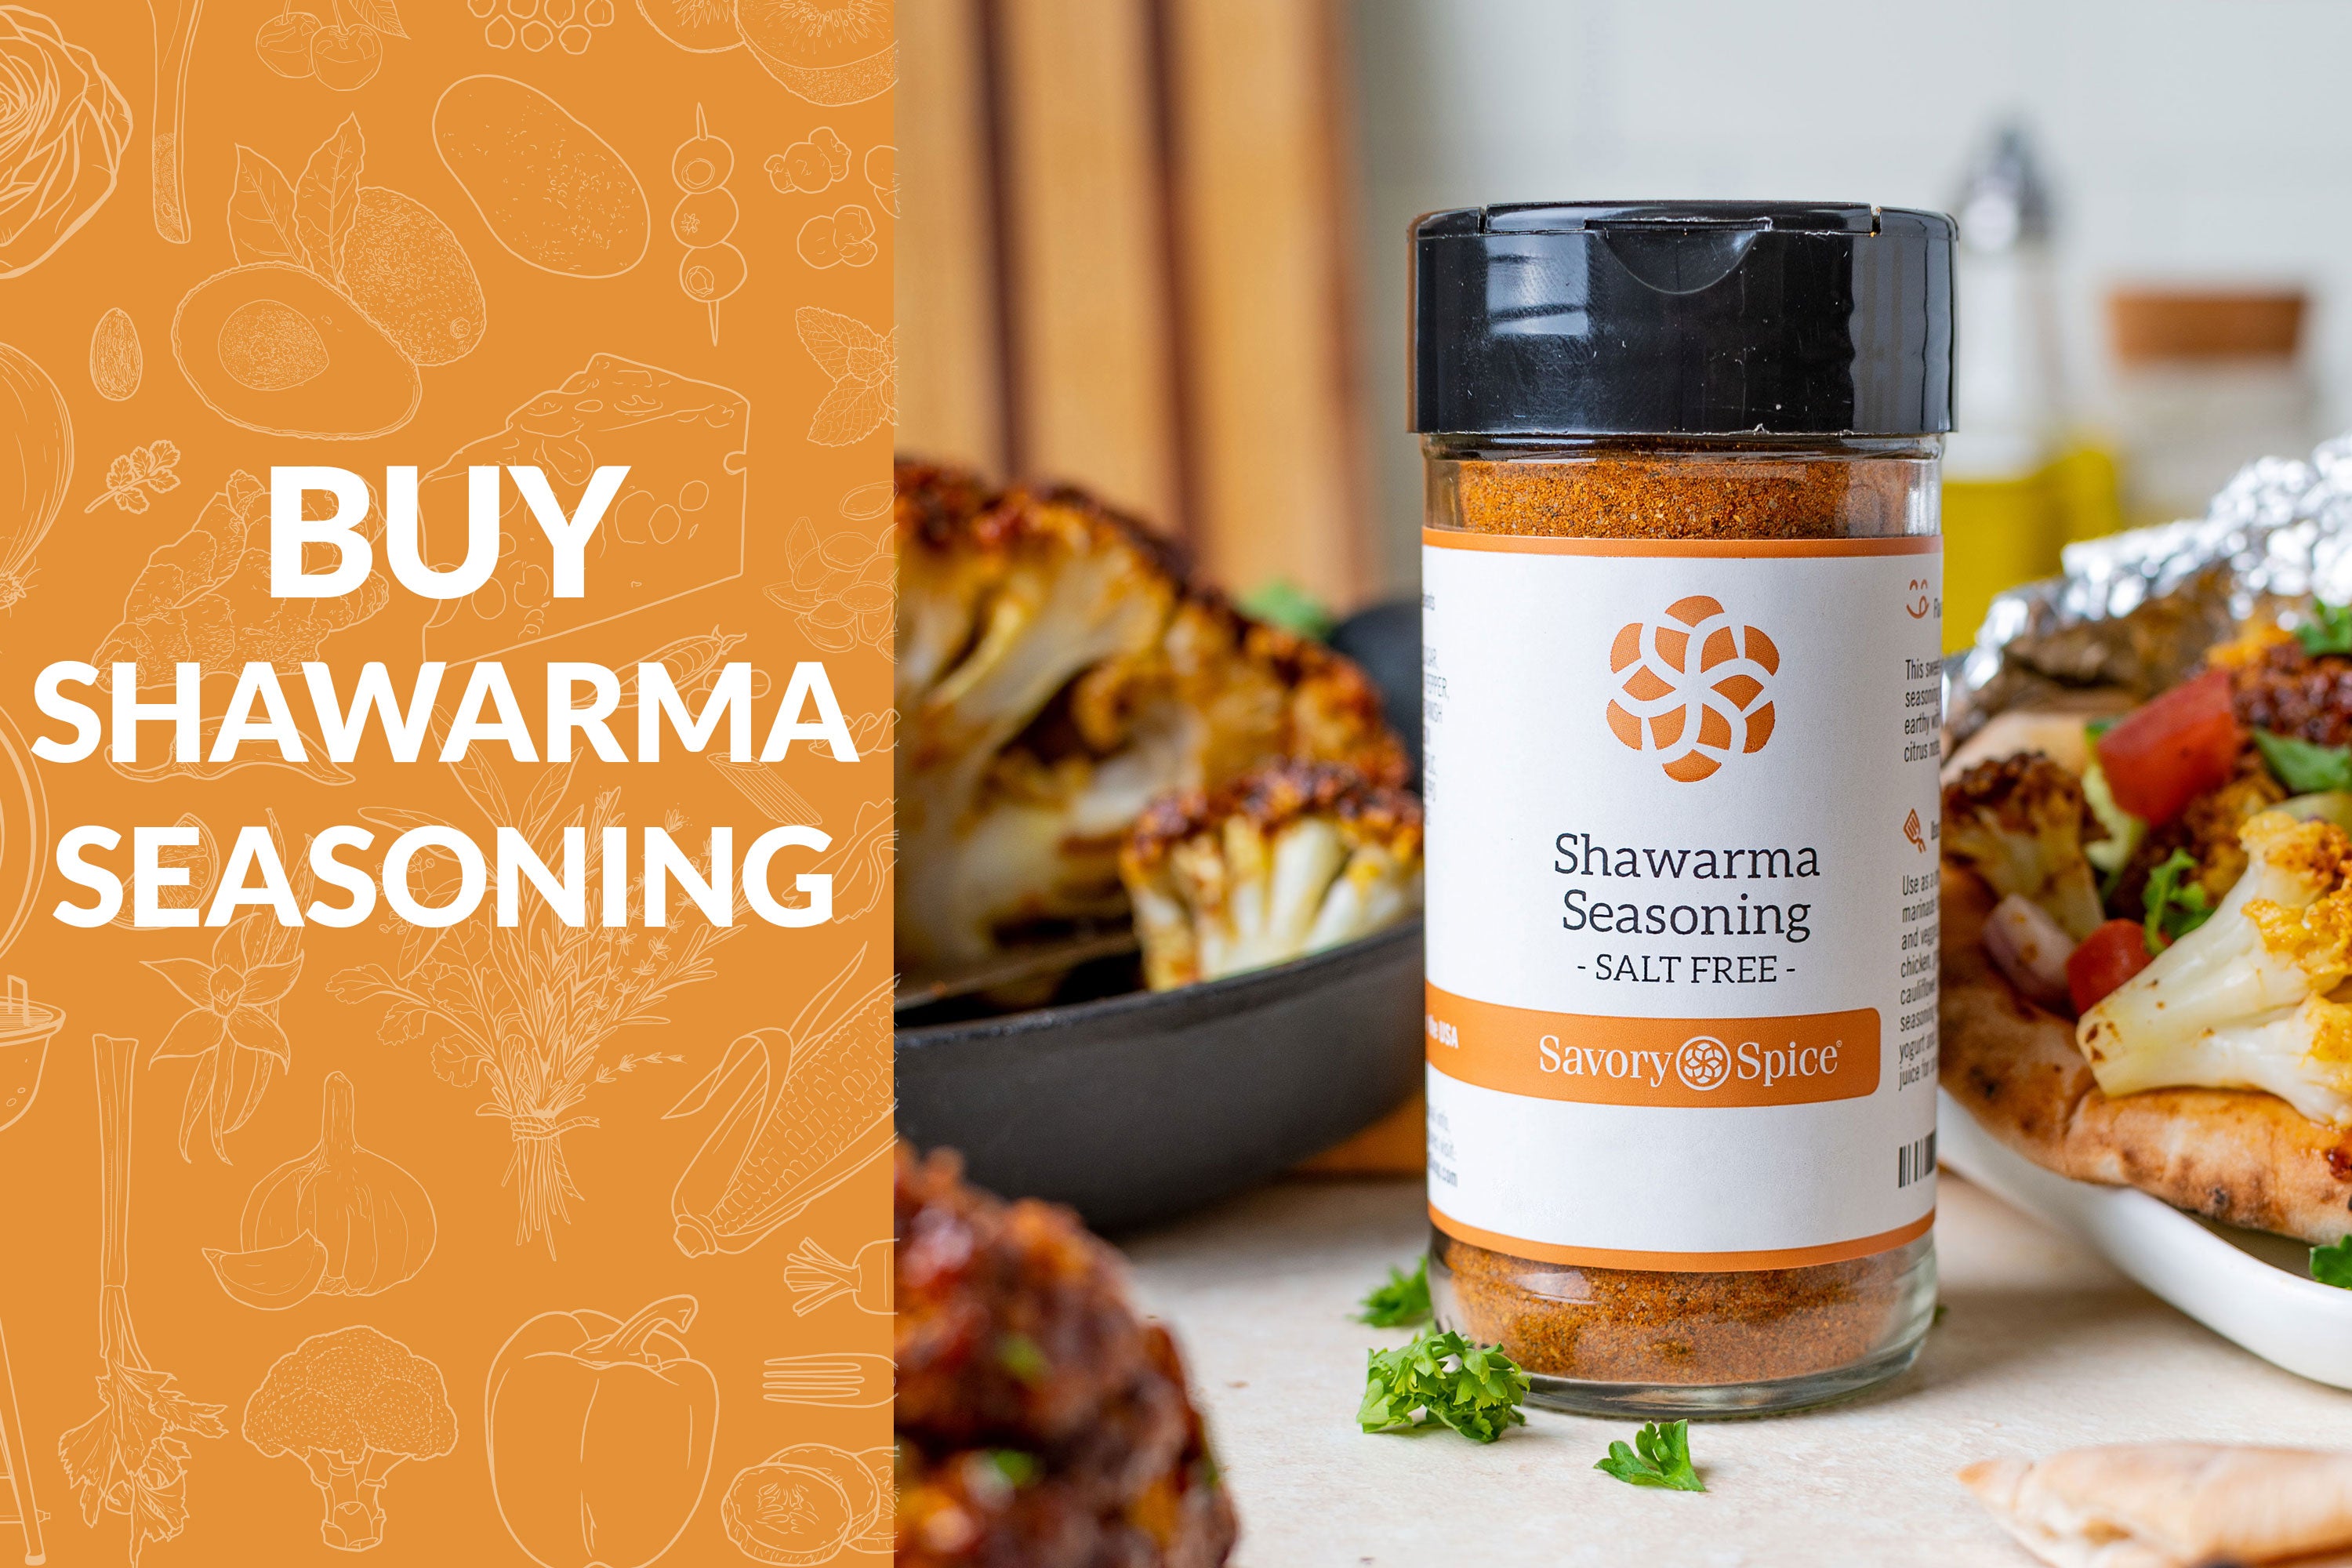 Buy Shawarma Seasoning on orange background with jar of Shawarma Seasoning and shawarma cauliflower on the right hand side